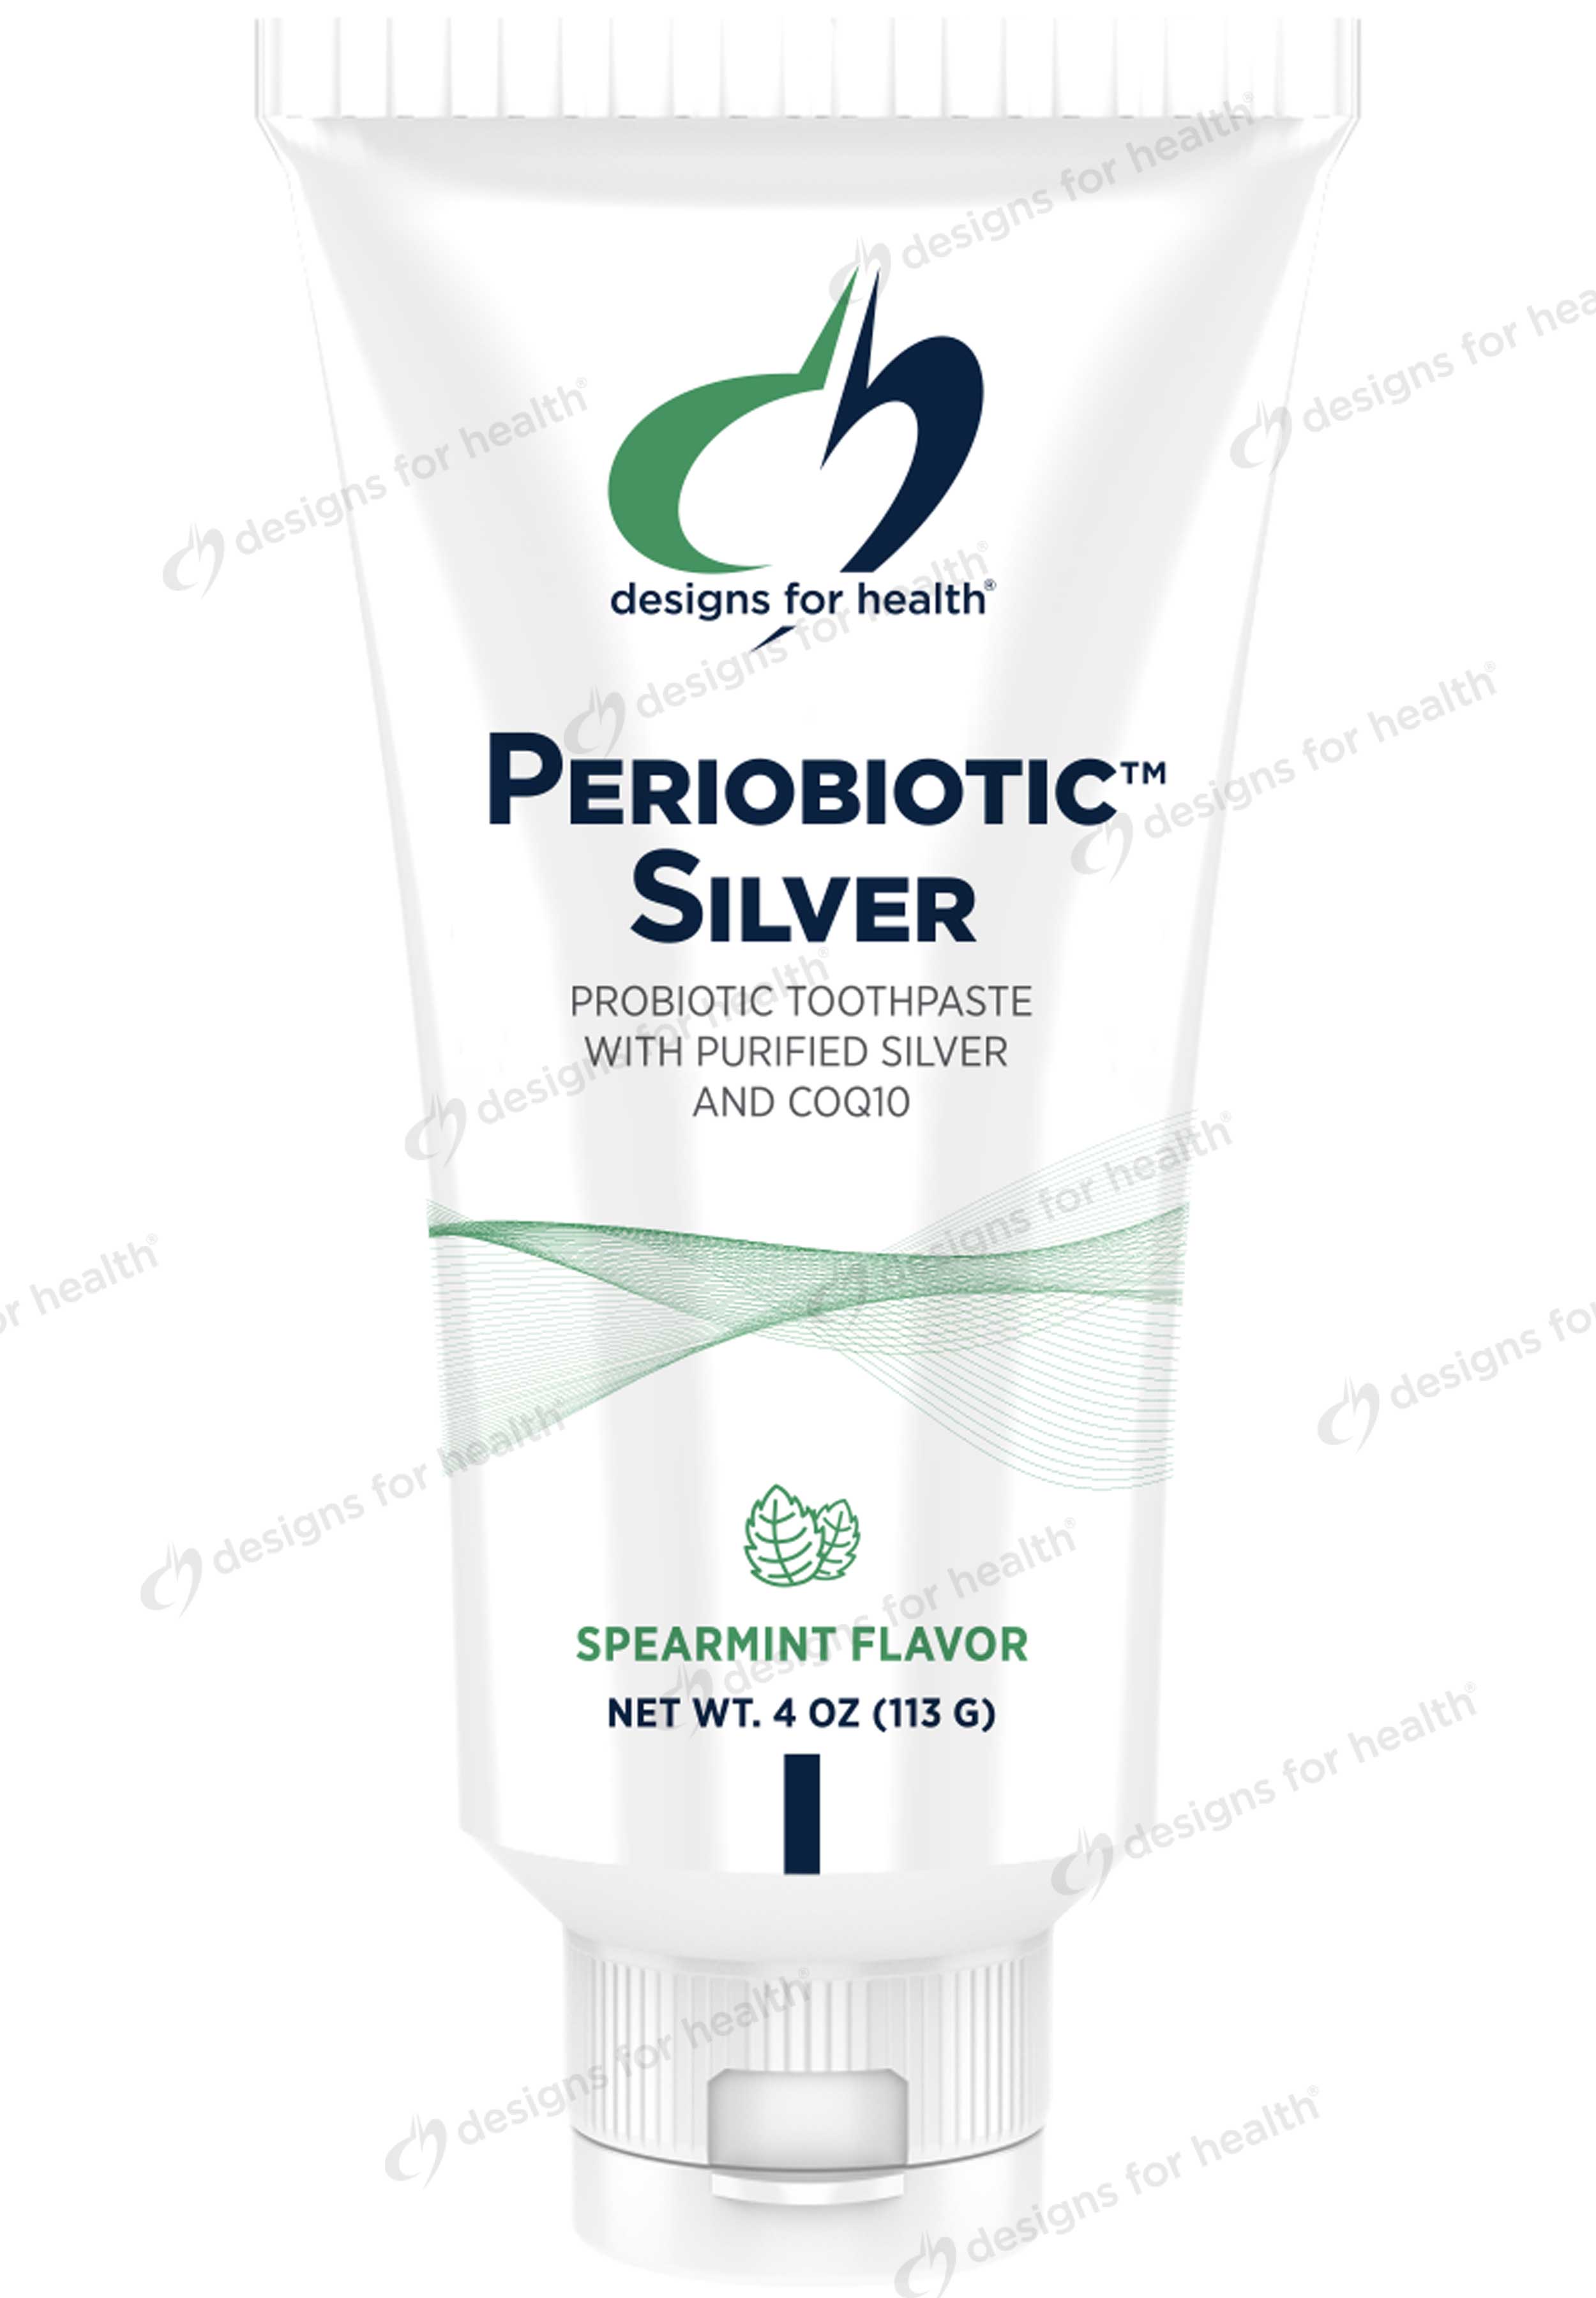 Designs for Health PerioBiotic Silver (Probiotic Toothpaste)